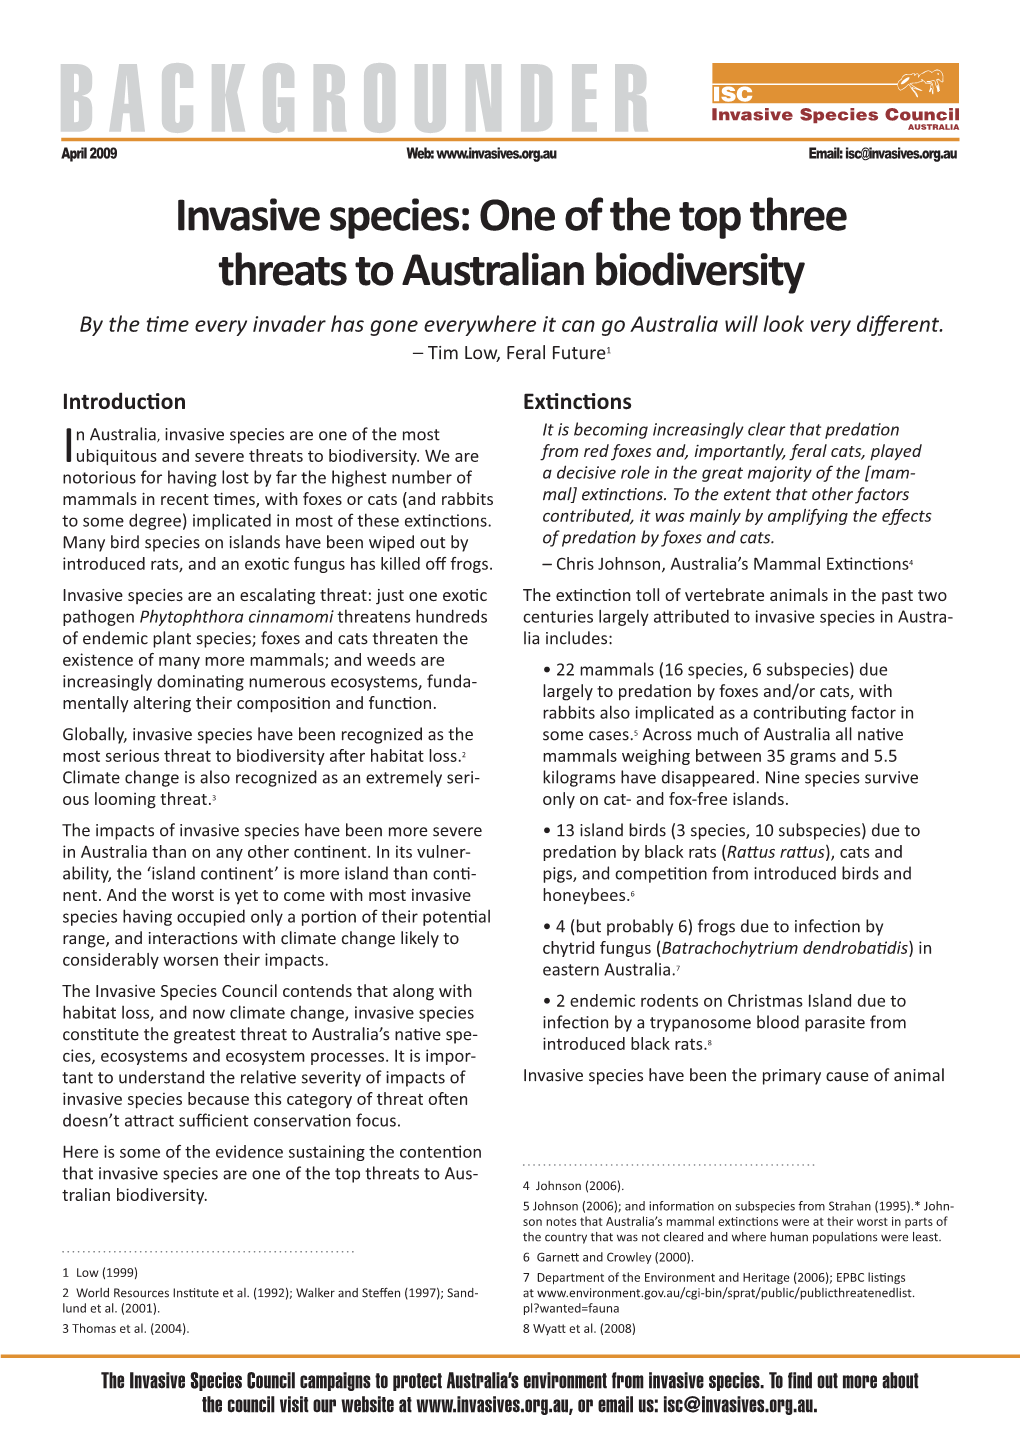 Invasive Species: One of the Top Three Threats to Australian Biodiversity